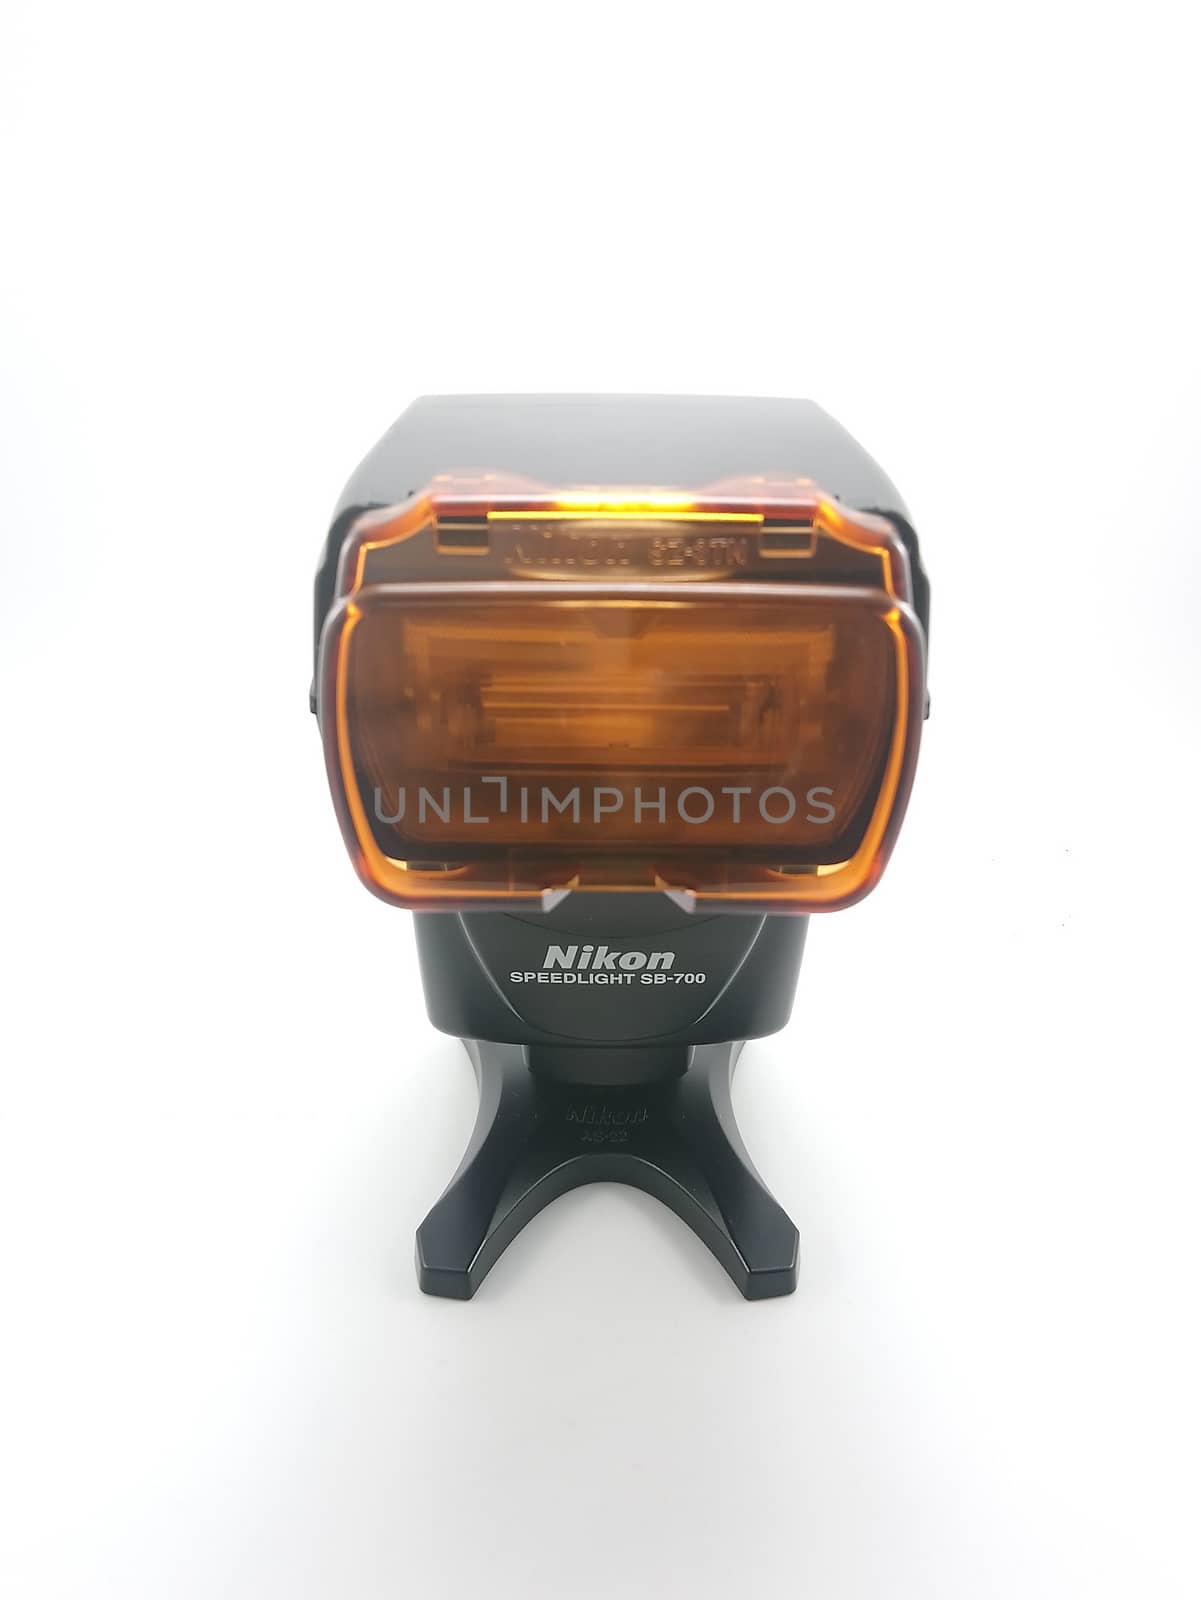 Nikon sb 700 flash speedlight with incandescent filter in Manila by imwaltersy